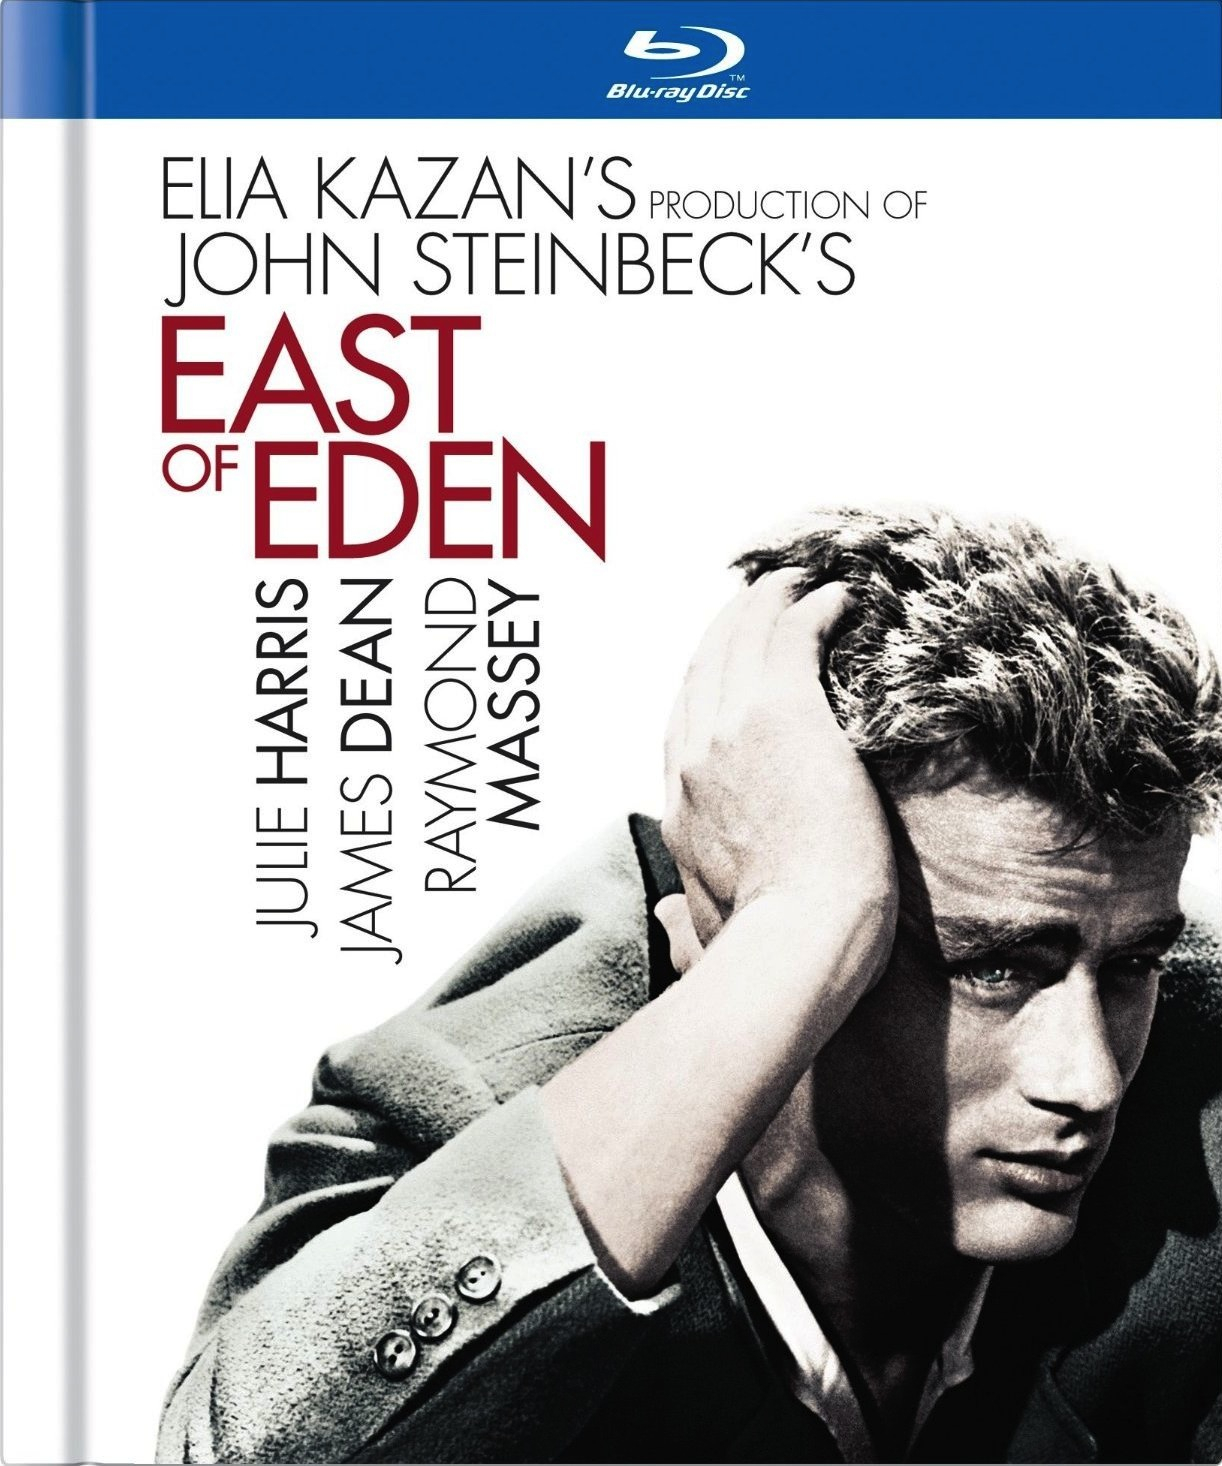 [伊甸园之东].East.of.Eden.1955.BluRay.1080p.AVC.DTS-HD.MA.5.1-NoGroup   40.34G9 L  _3 g# Z5 k$ t, H$ [1 Q; N$ r-1.jpg